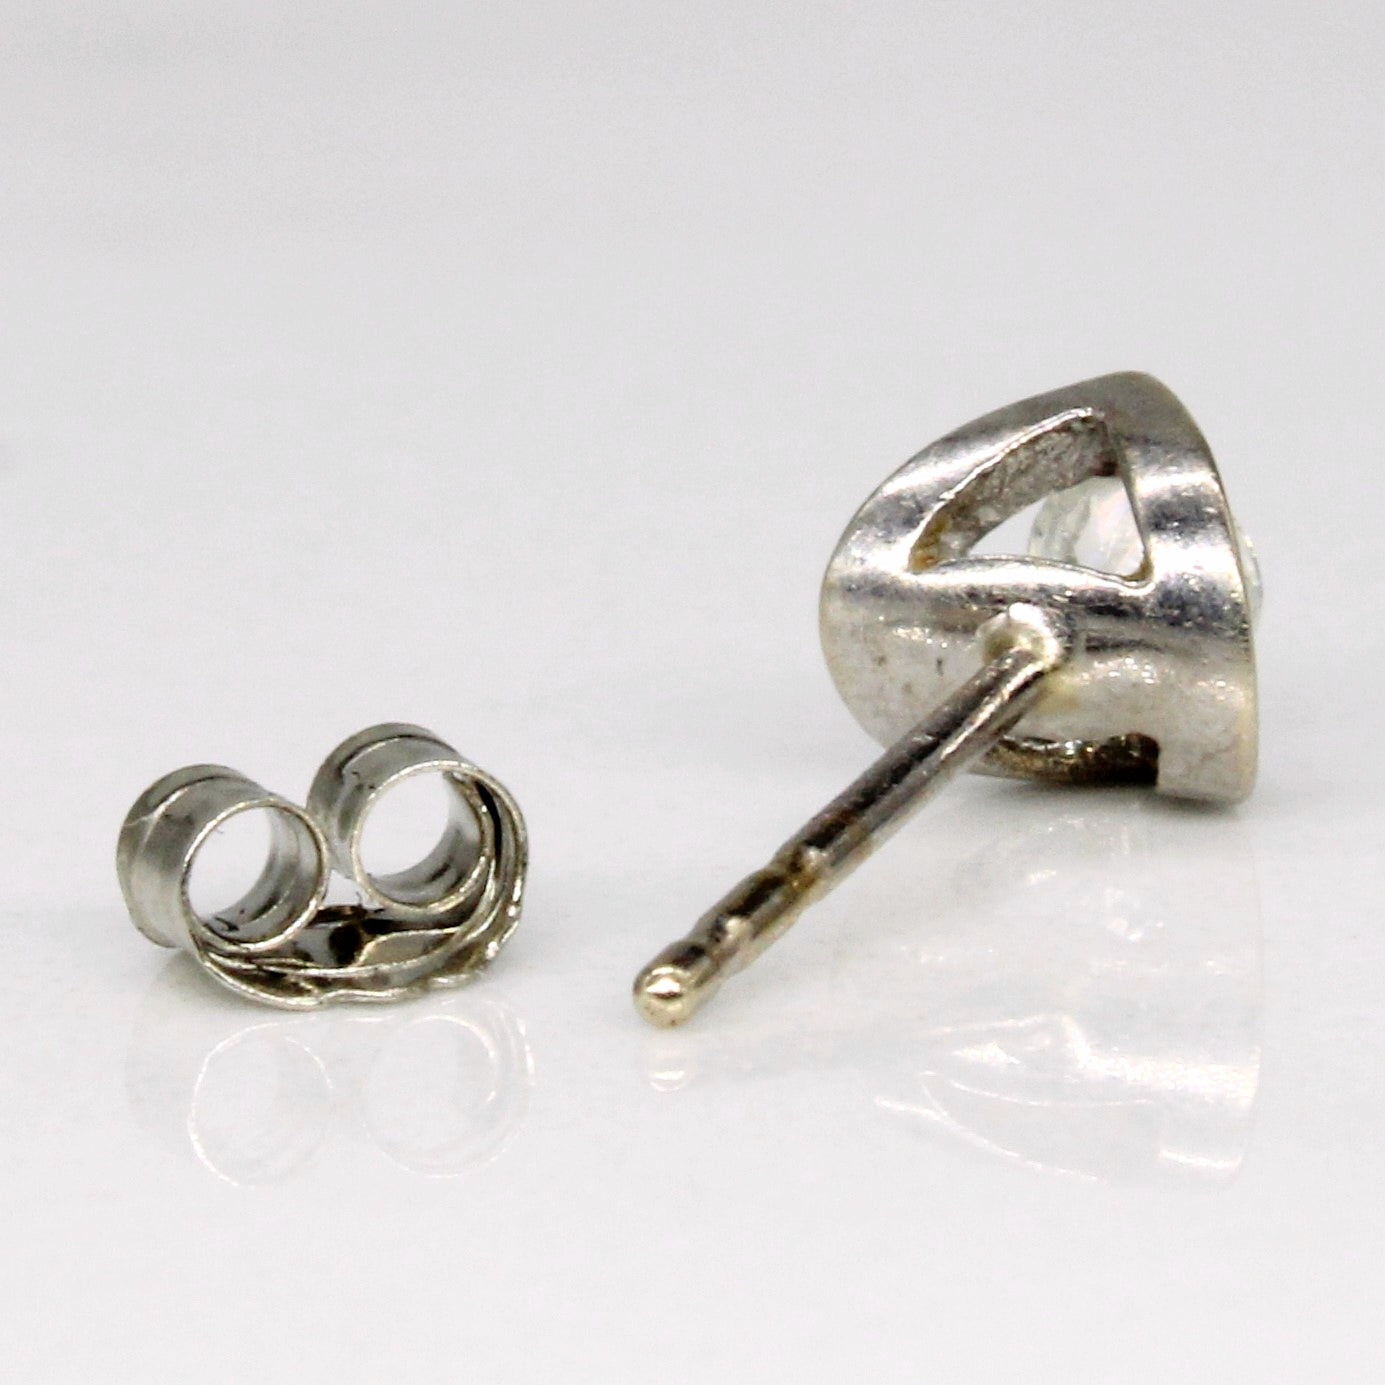 14k Solitaire Diamond Earrings | 0.16ctw |